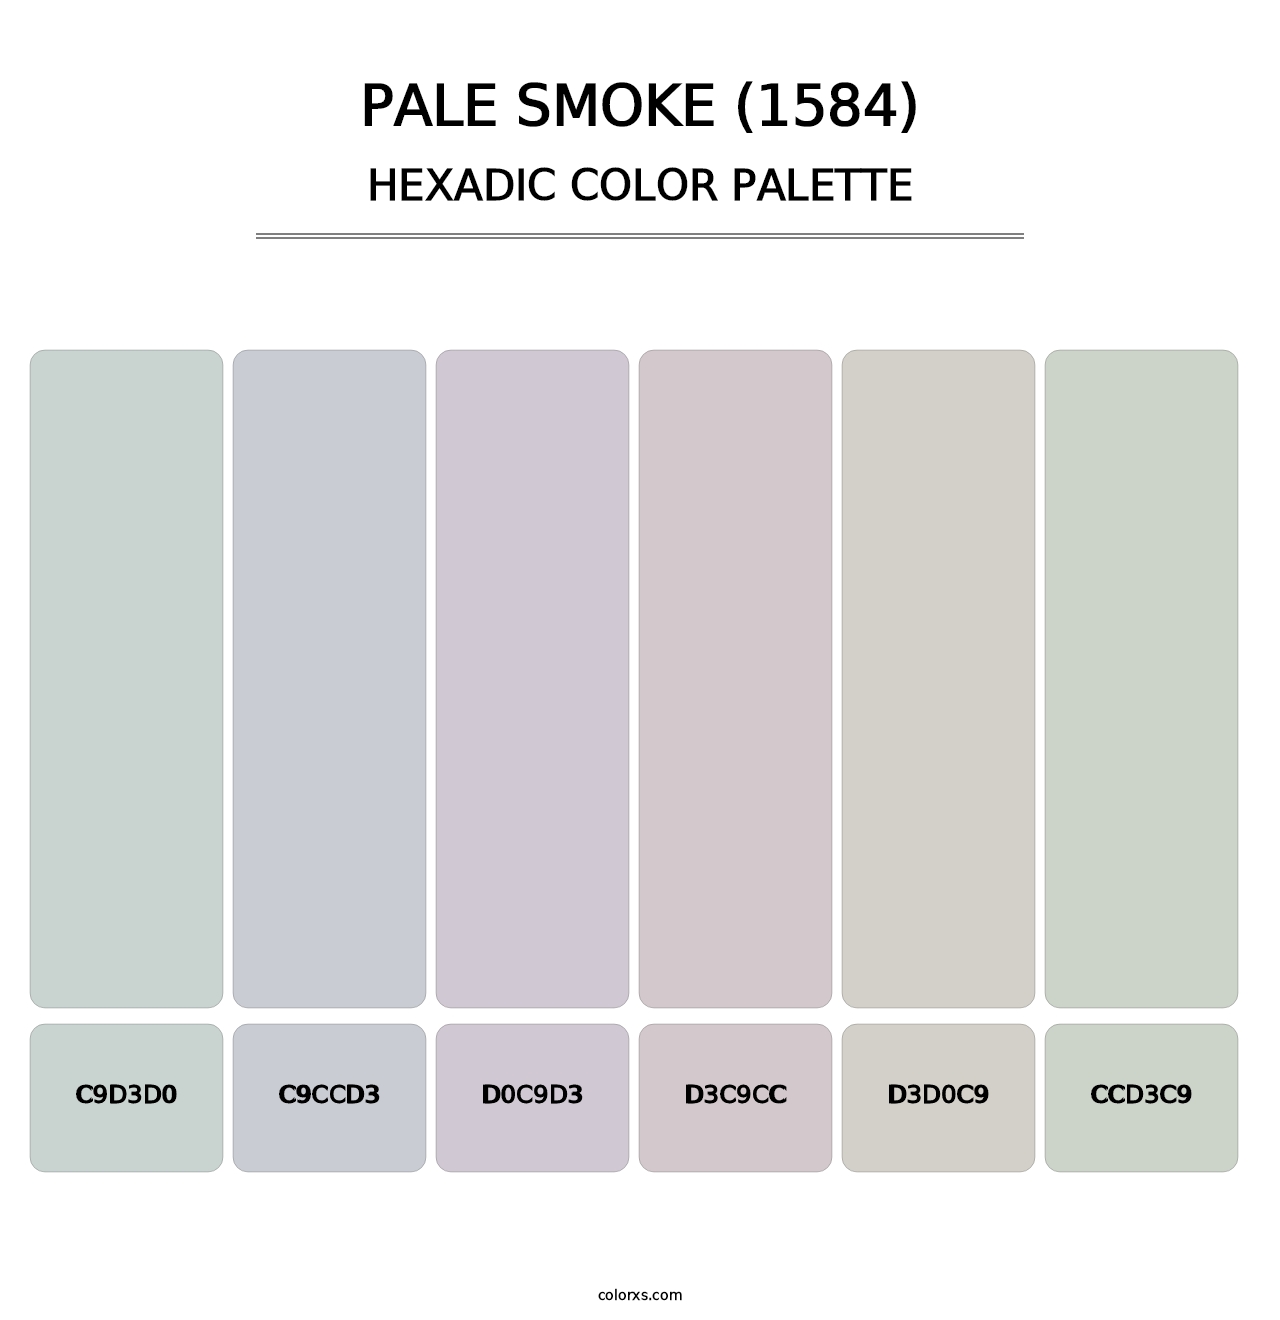 Pale Smoke (1584) - Hexadic Color Palette